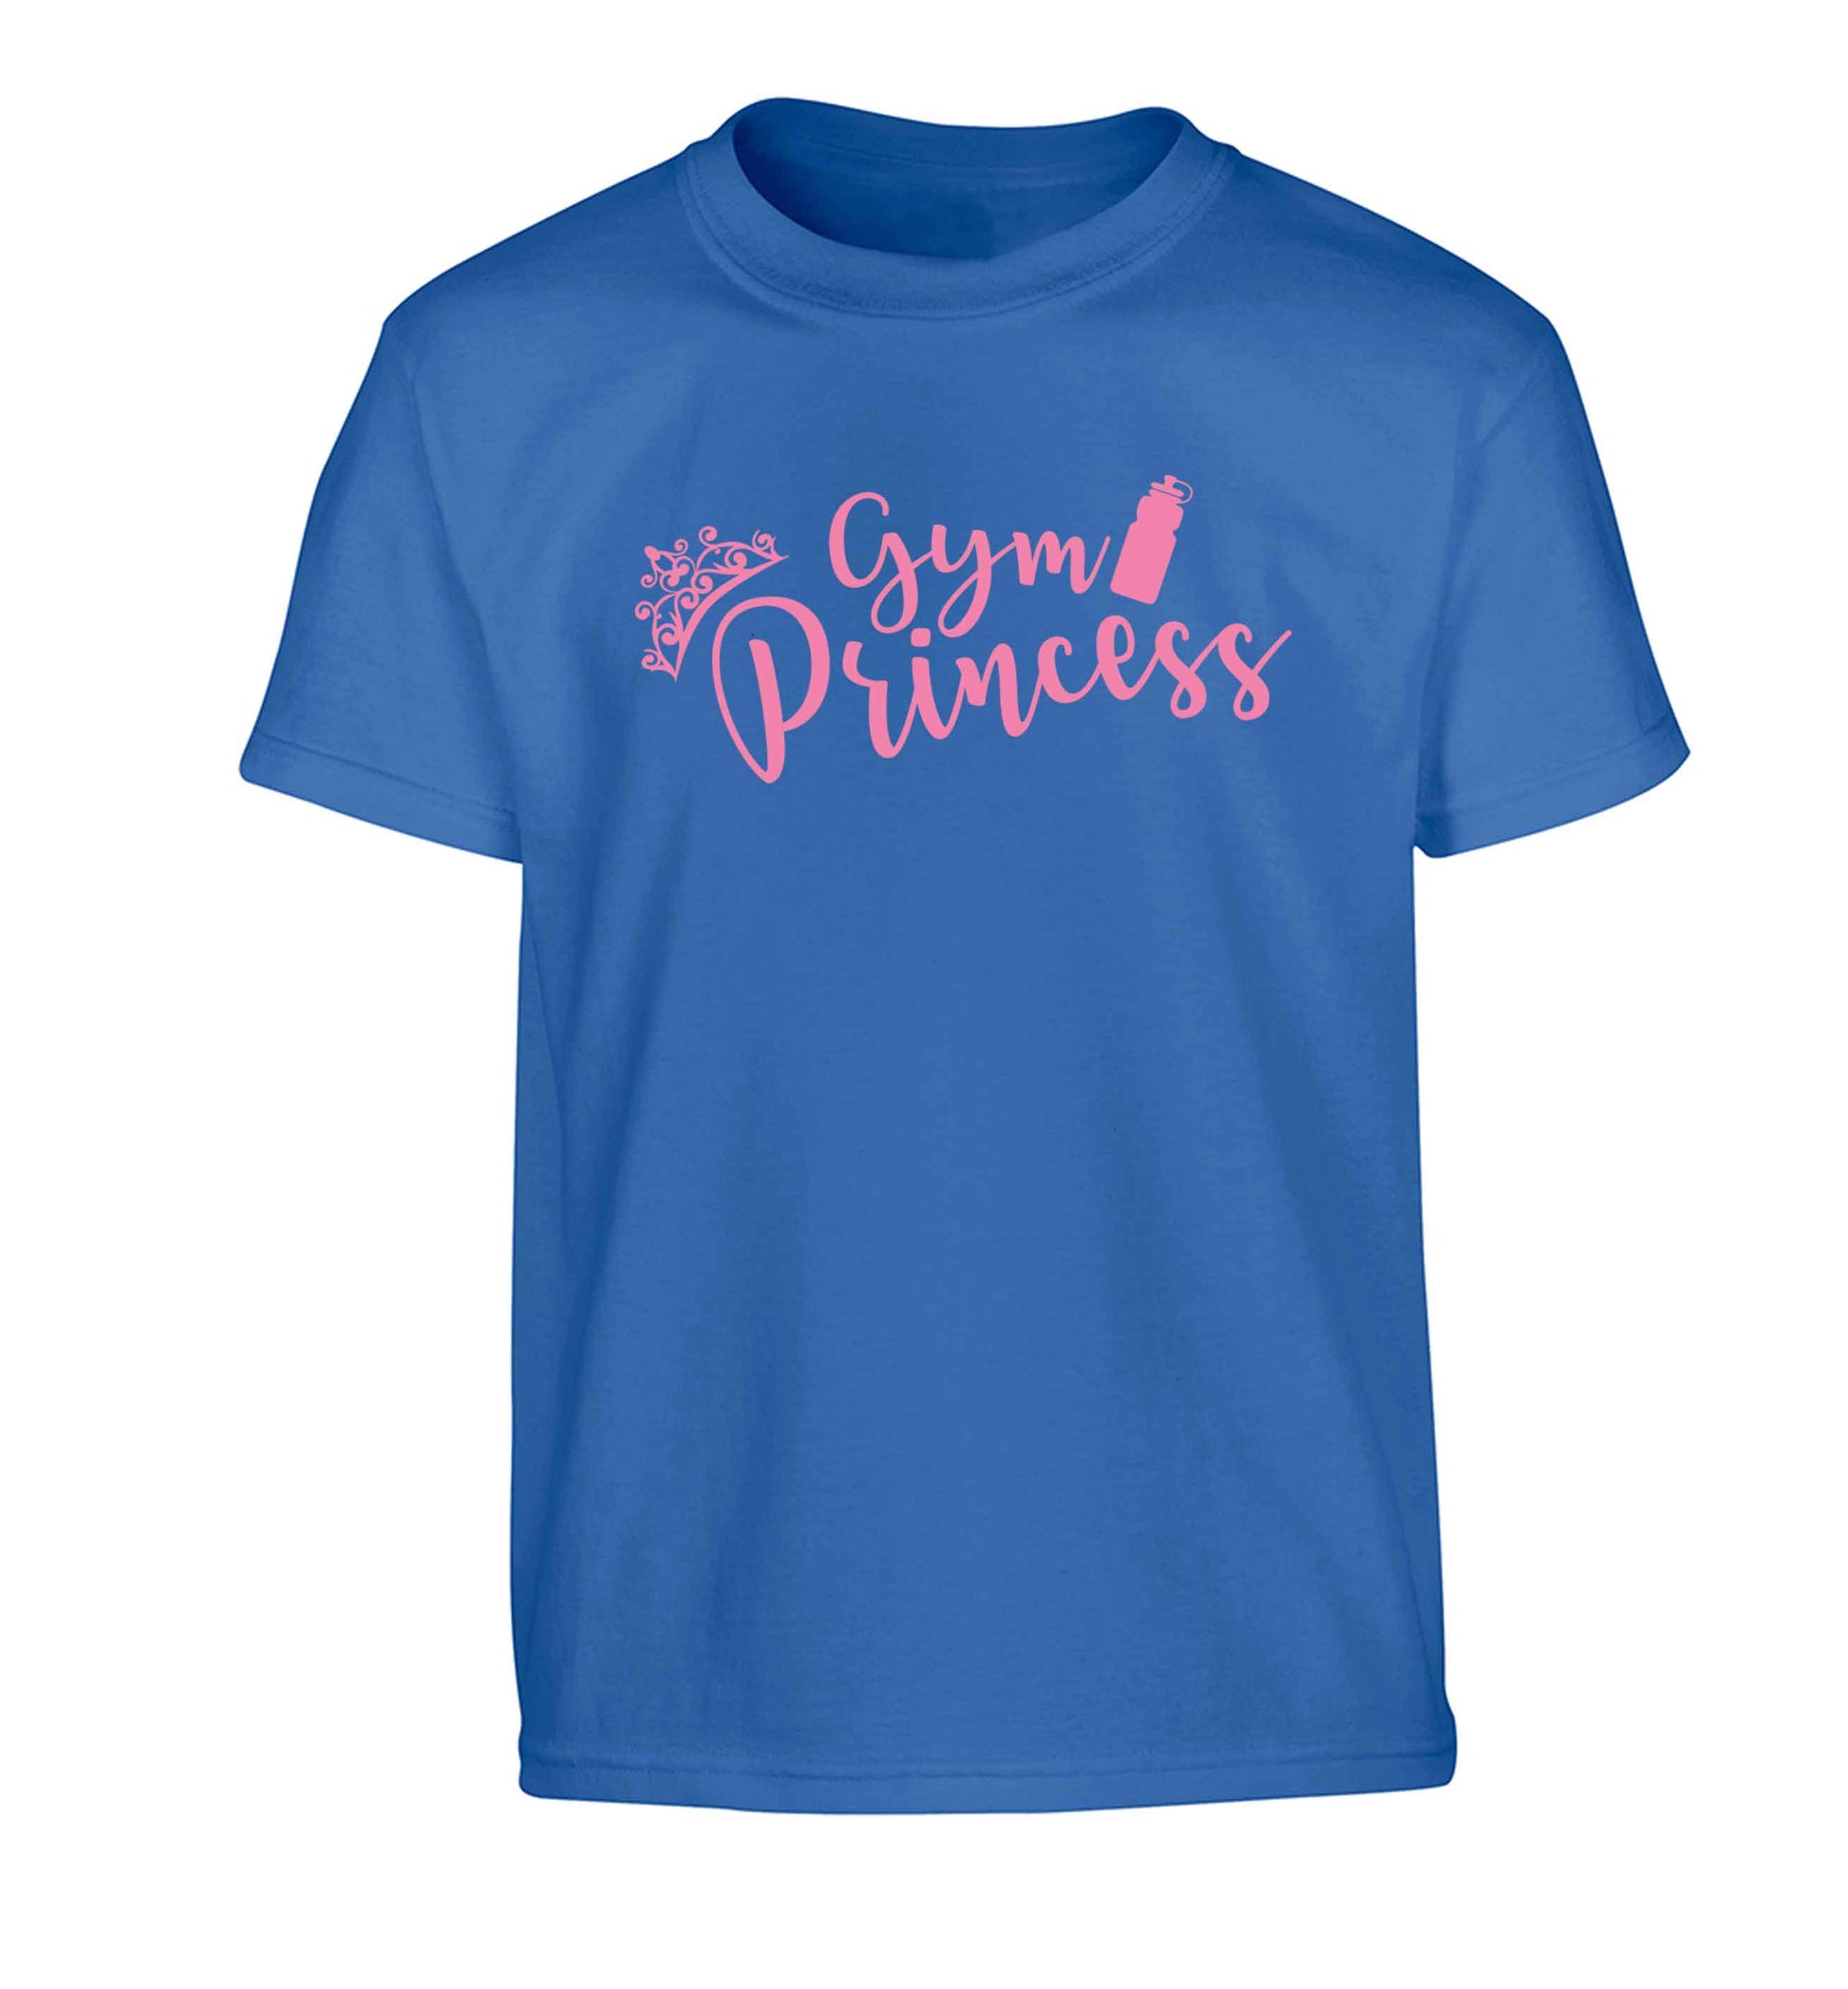 Gym princess Children's blue Tshirt 12-13 Years